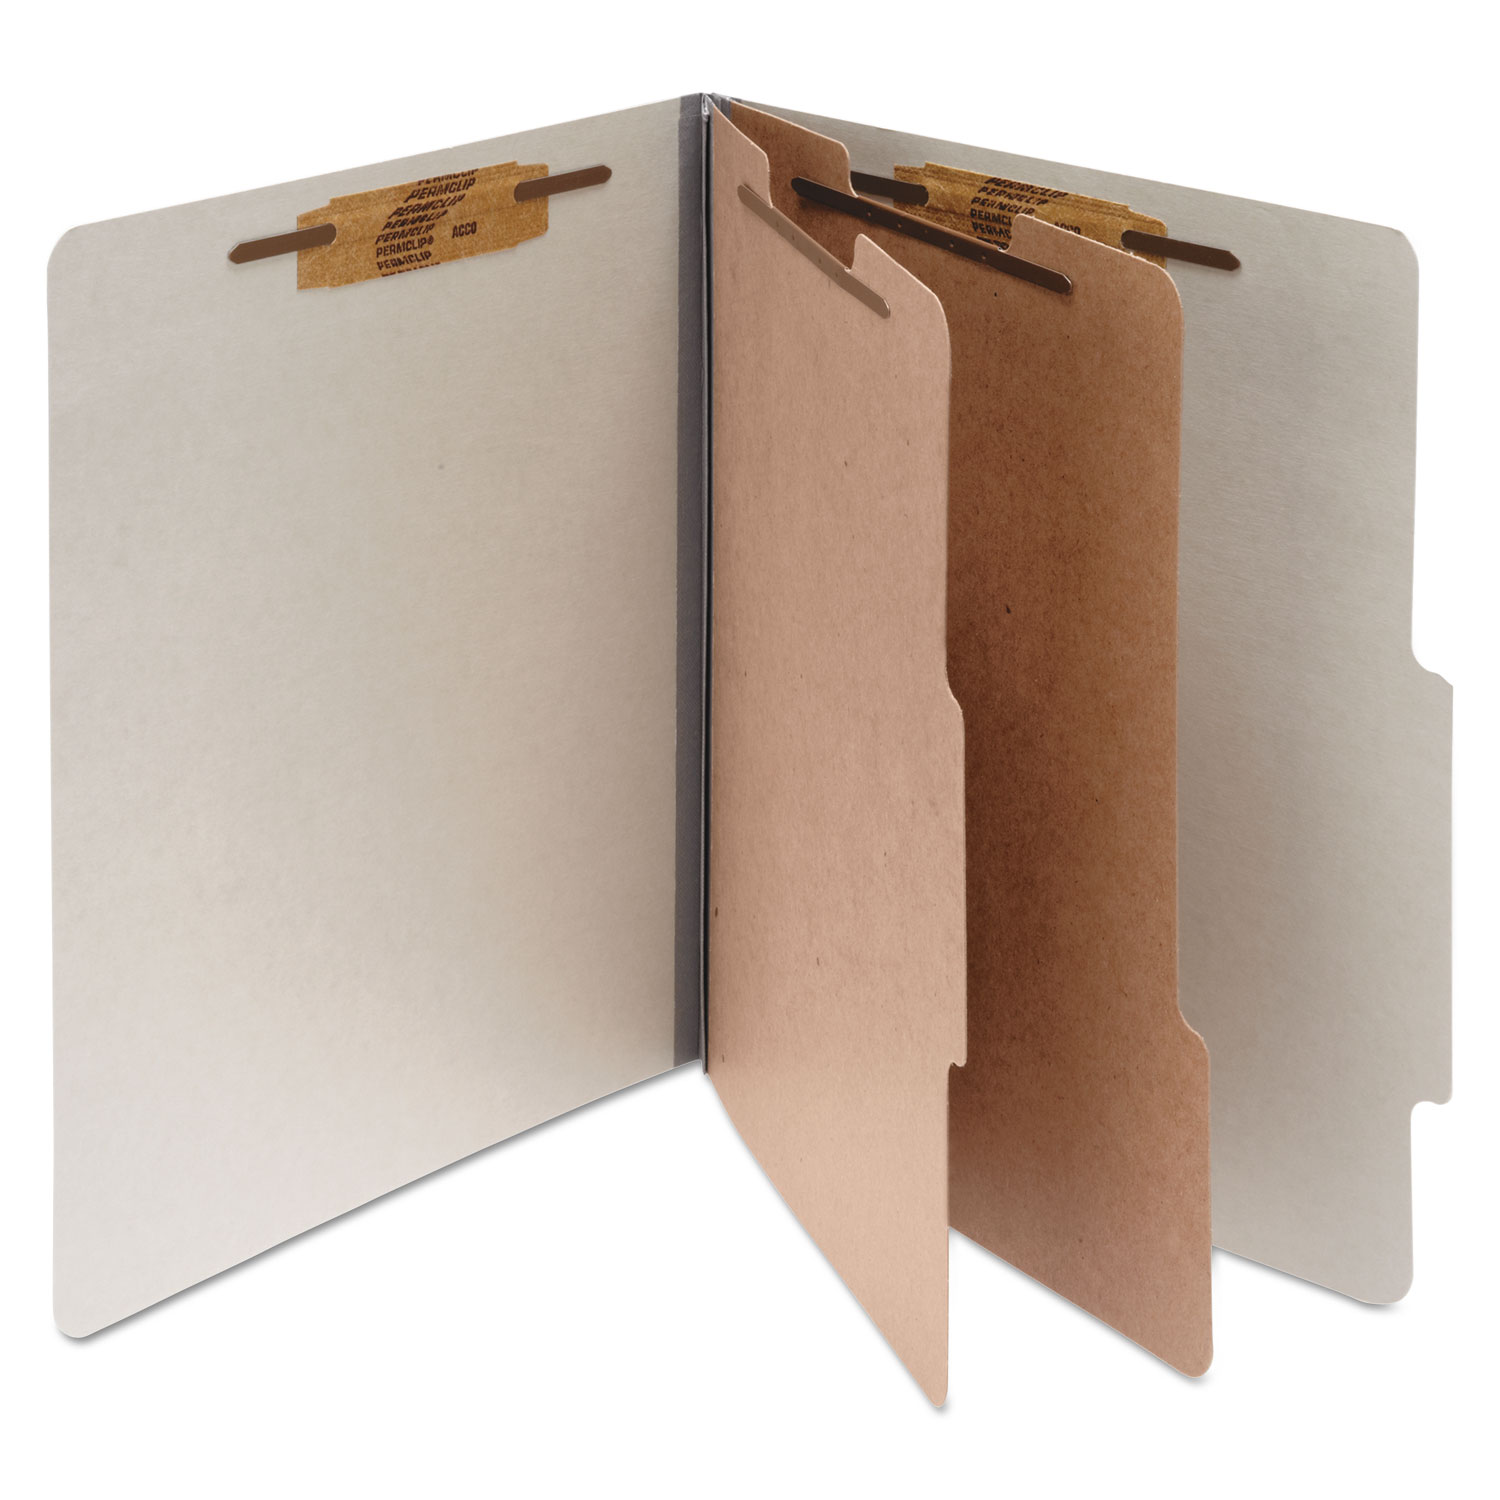  ACCO A7015056 Pressboard Classification Folders, 2 Dividers, Letter Size, Mist Gray, 10/Box (ACC15056) 